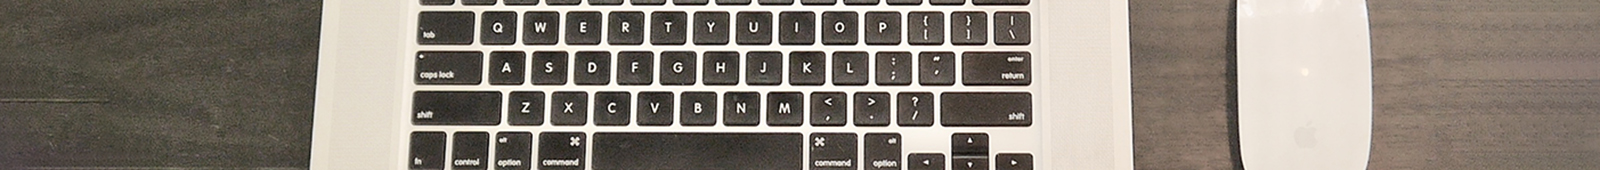 Mac Proのキーボード部分